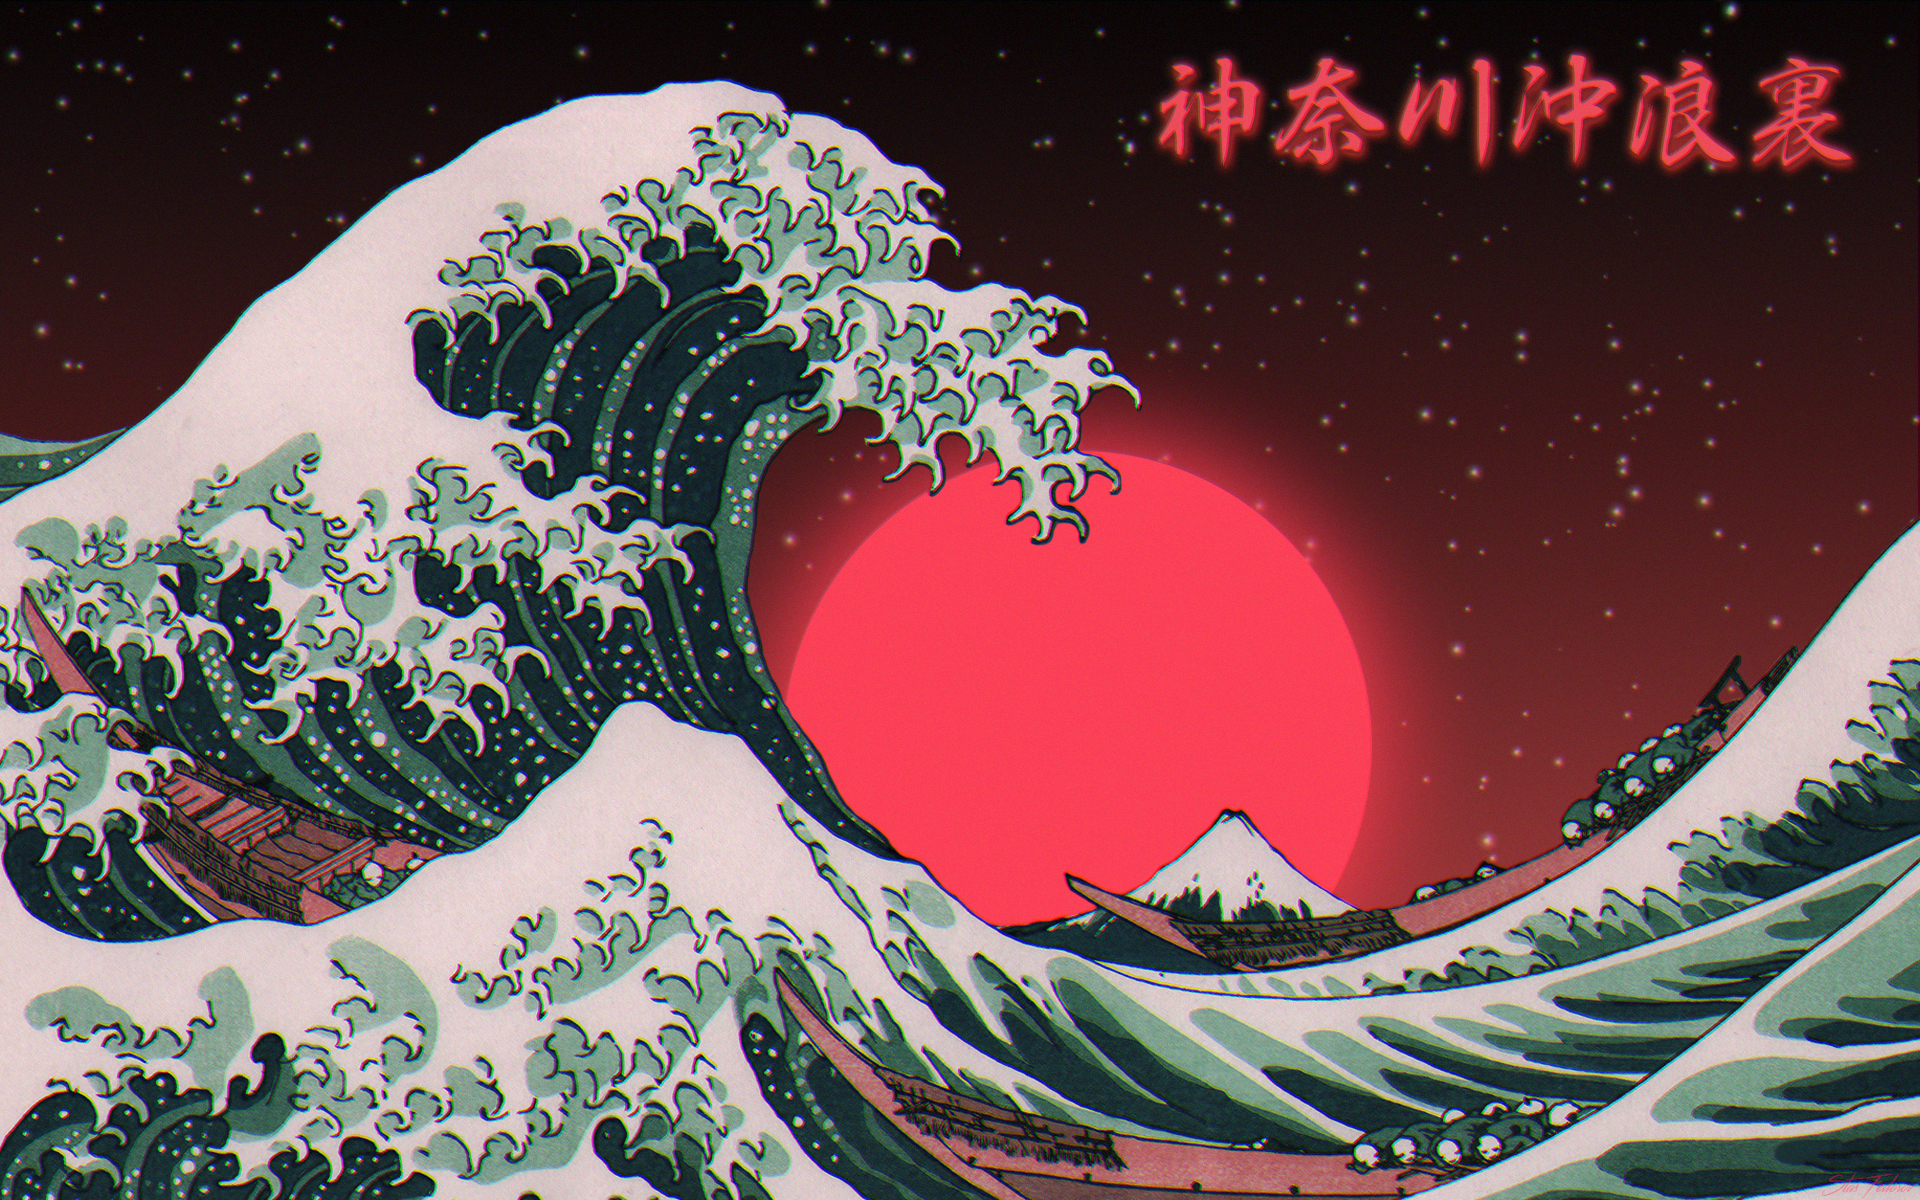 General 1920x1200 digital art typography artwork Japan Asia photoshopped sea The Great Wave of Kanagawa